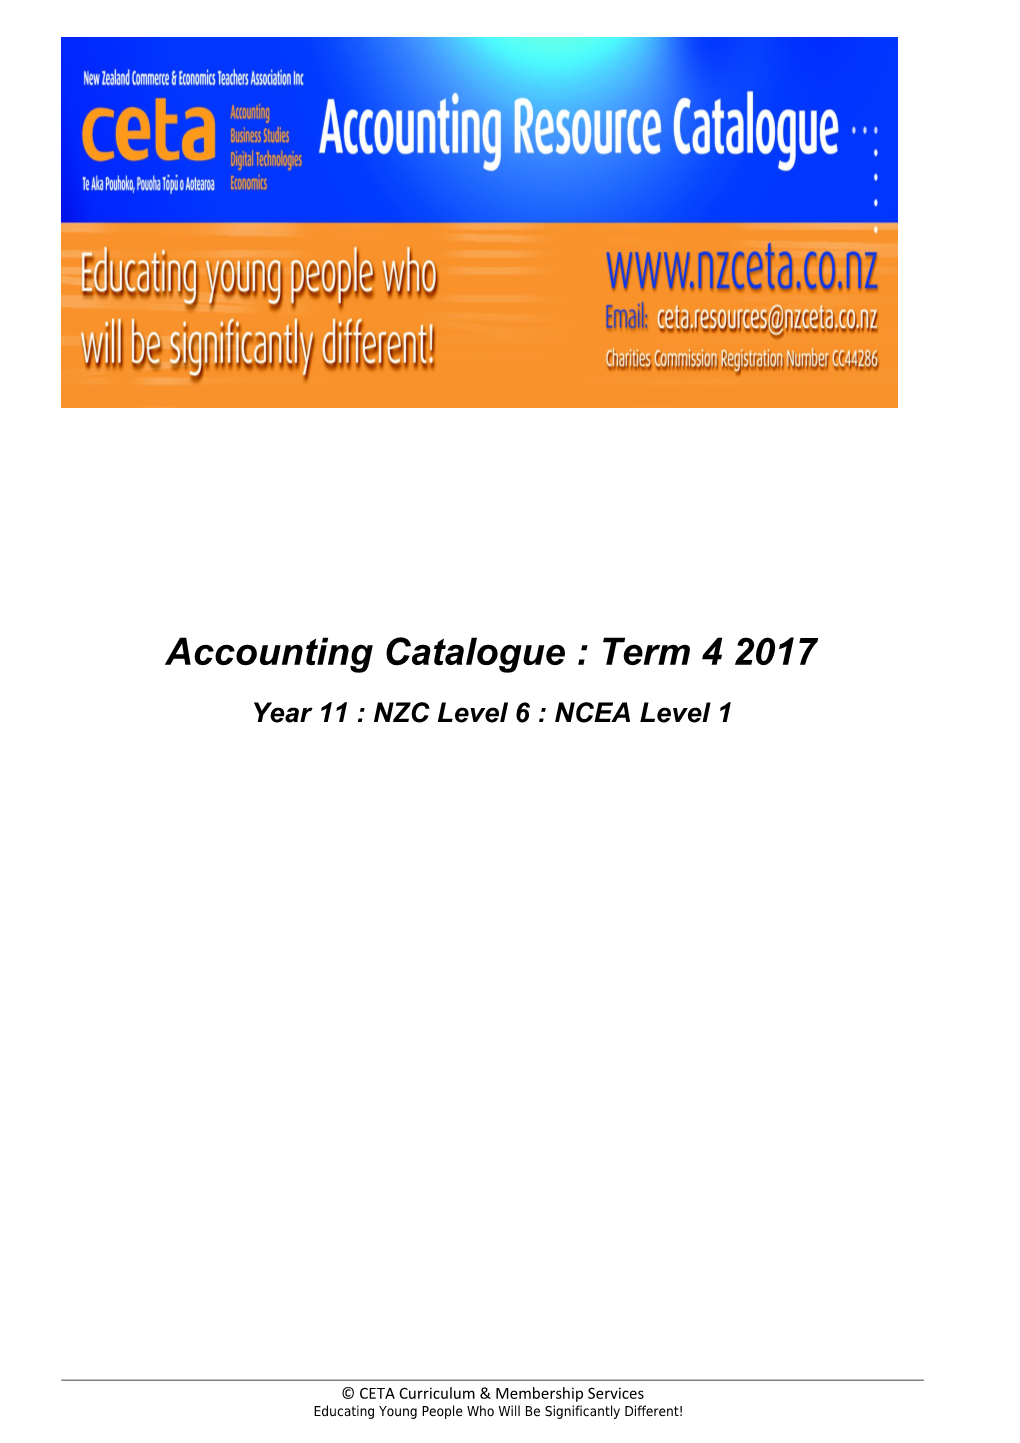 Year 11 : NZC Level 6 : NCEA Level 1